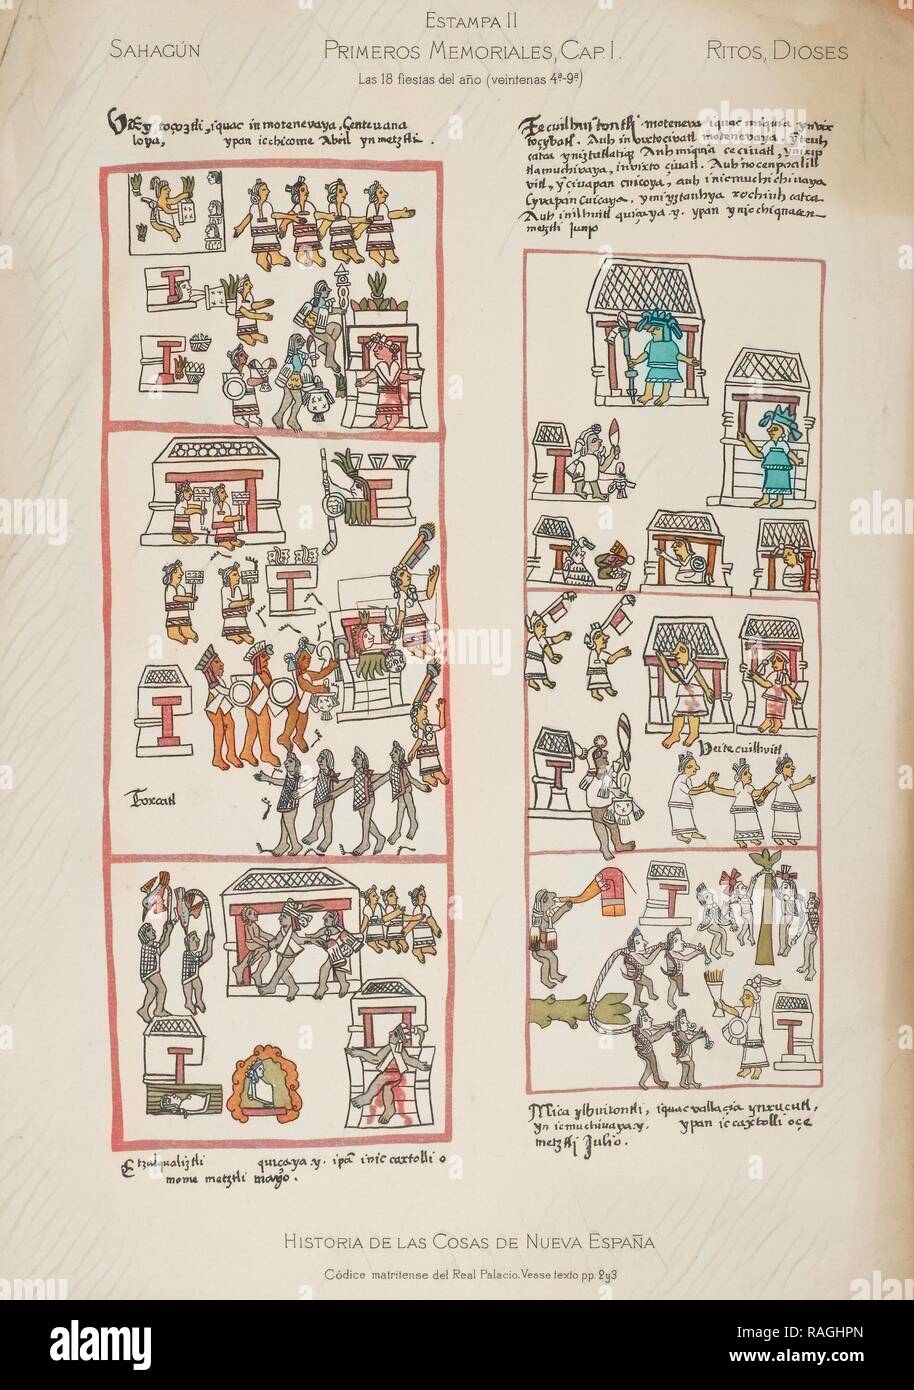 Historia de las cosas de Nueva Espana, Historia de las cosas de Nueva España, Sahagún, Bernardino de, d. 1590 reimagined Stock Photo